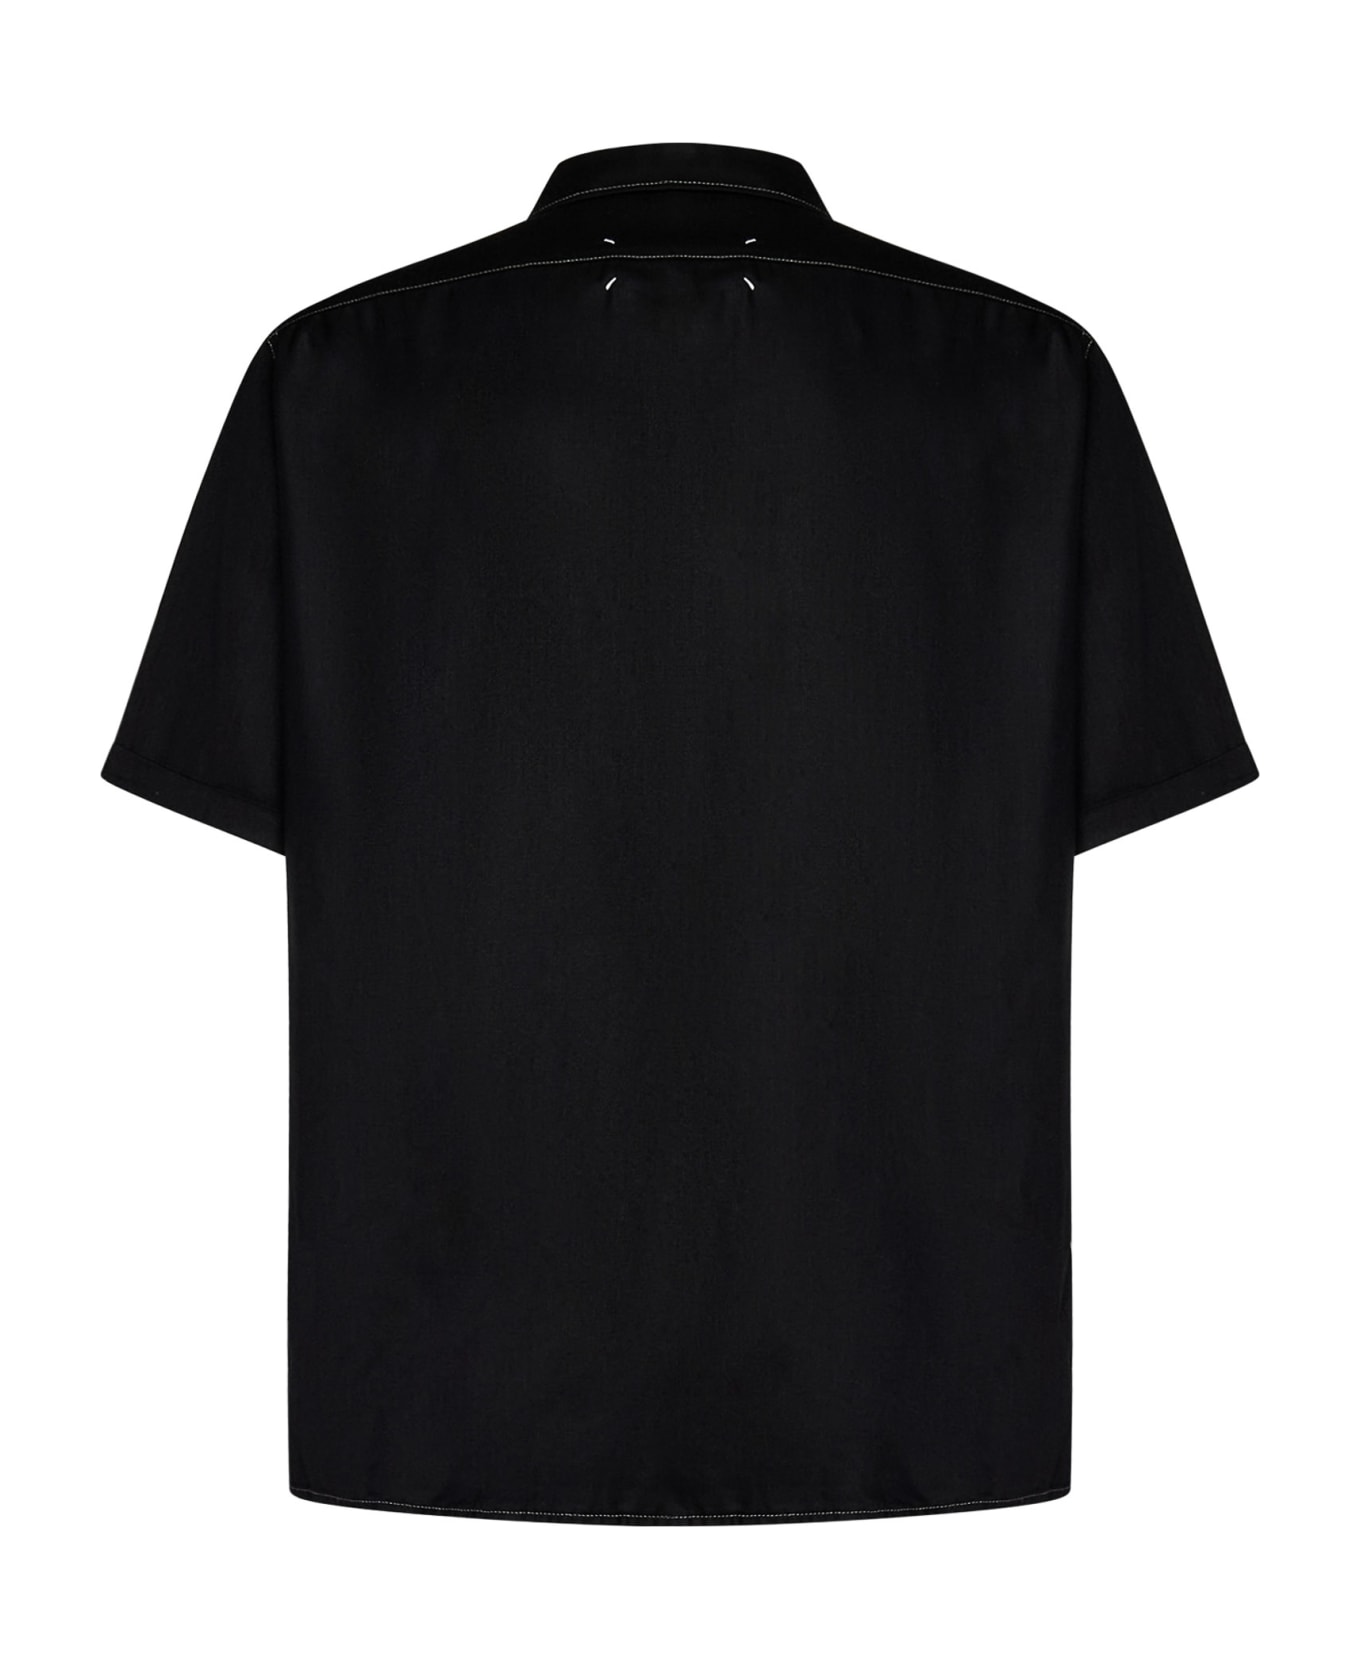 Maison Margiela Shirt - Black